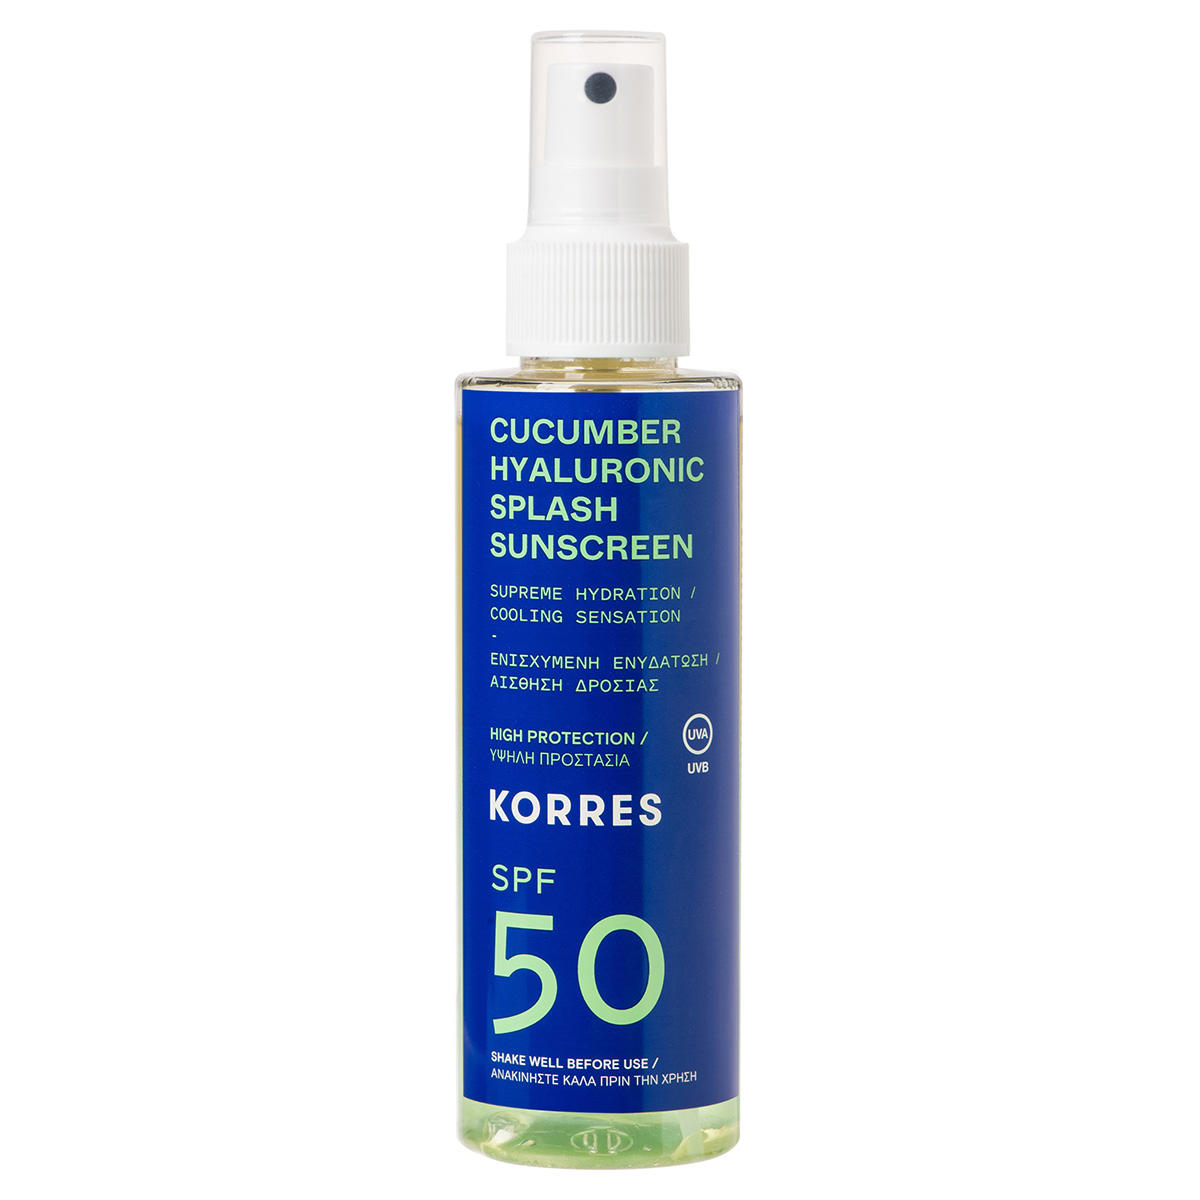 KORRES Cucumber Hyaluronic Splash 2 Phase Sunscreen Spray for Face and Body SPF 50 150 ml - 1